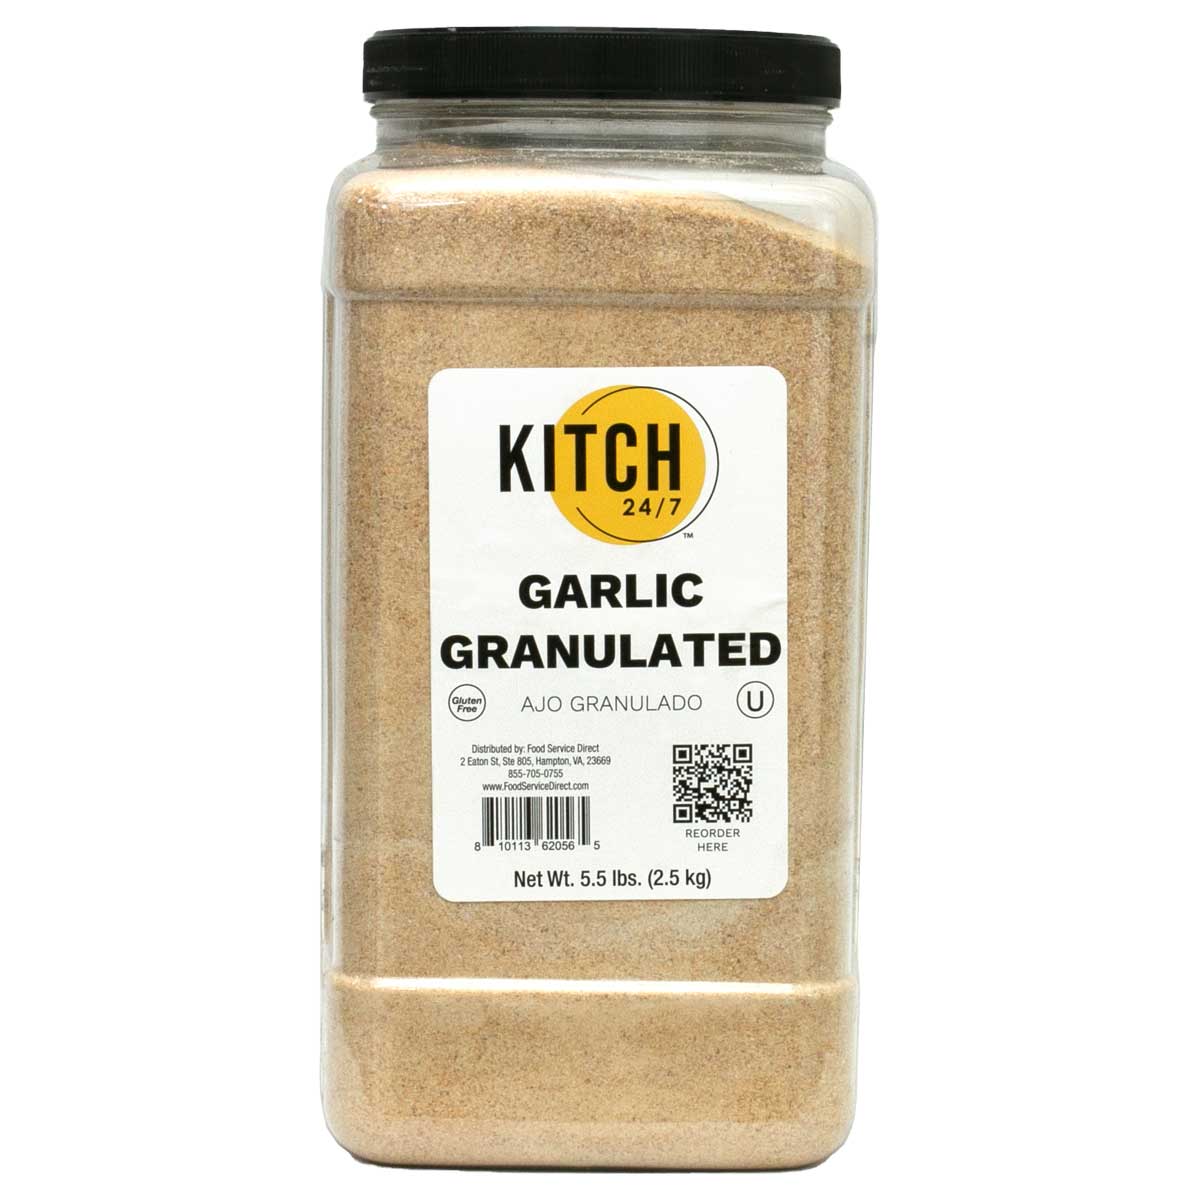 KITCH 24/7 Granulated Garlic, 5.5 Pound